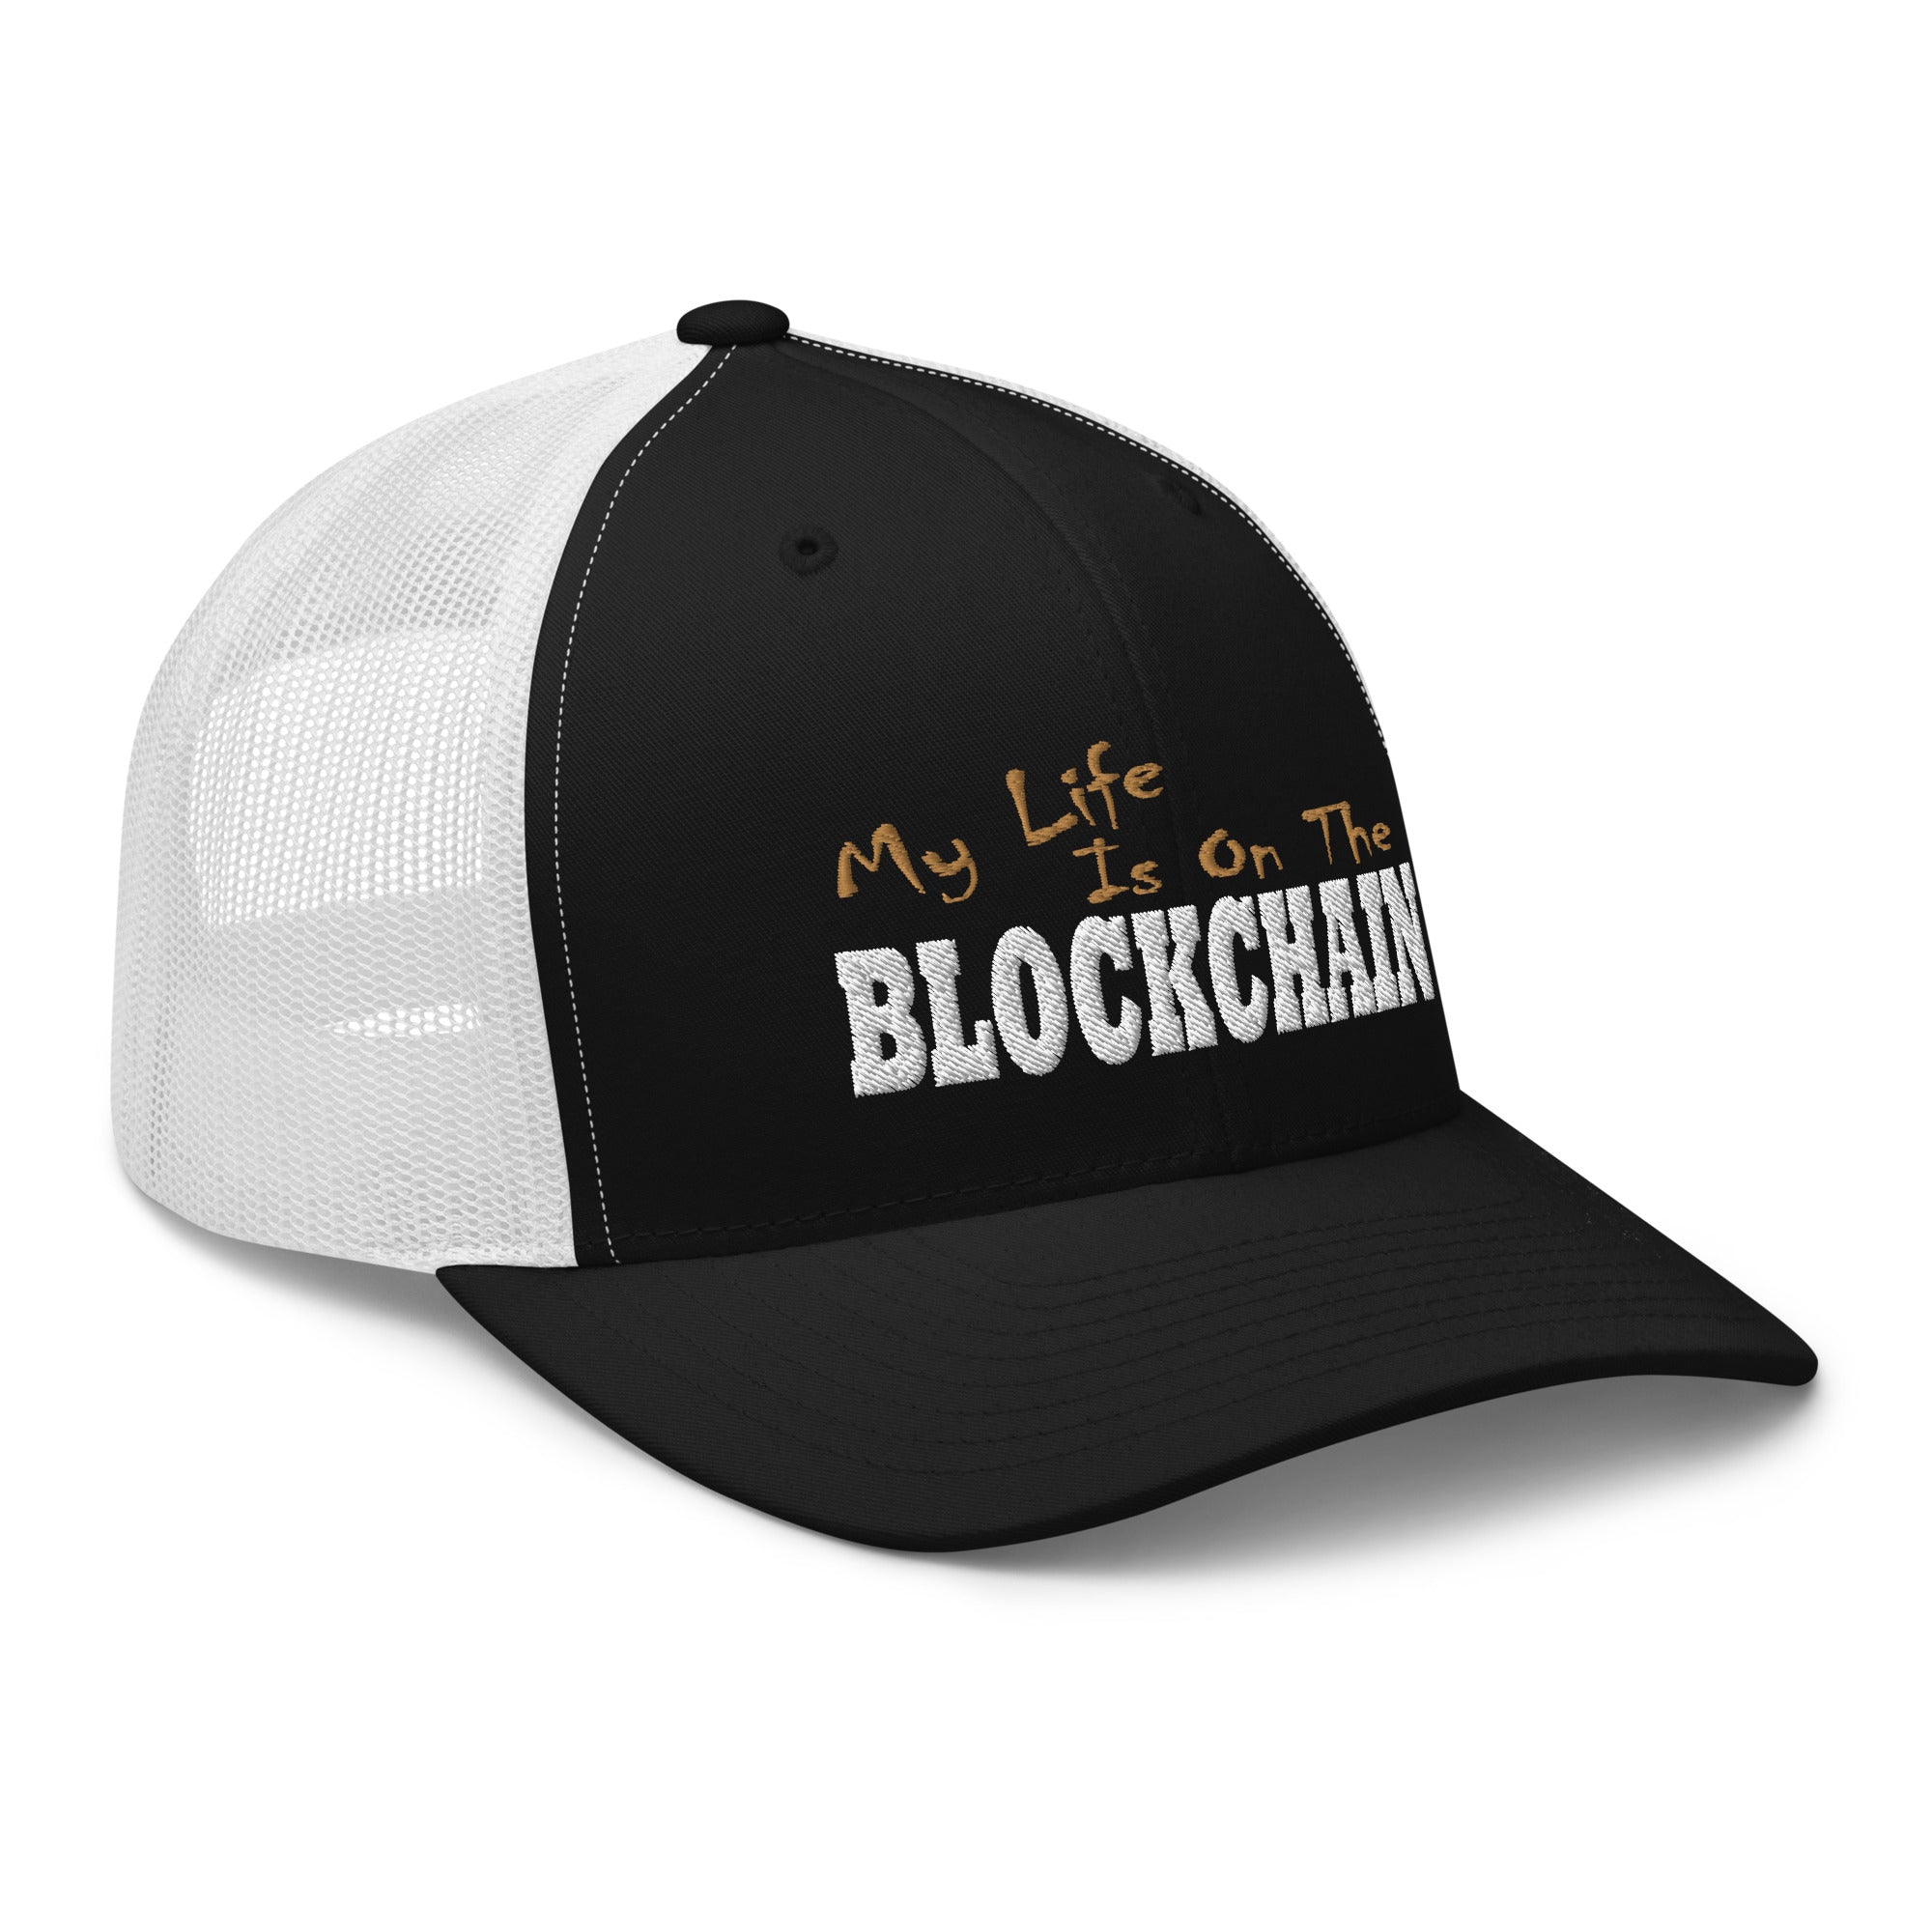 My Life is on the Blockchain Crypto Satire Bitcoin Trucker Cap Snapback Hat